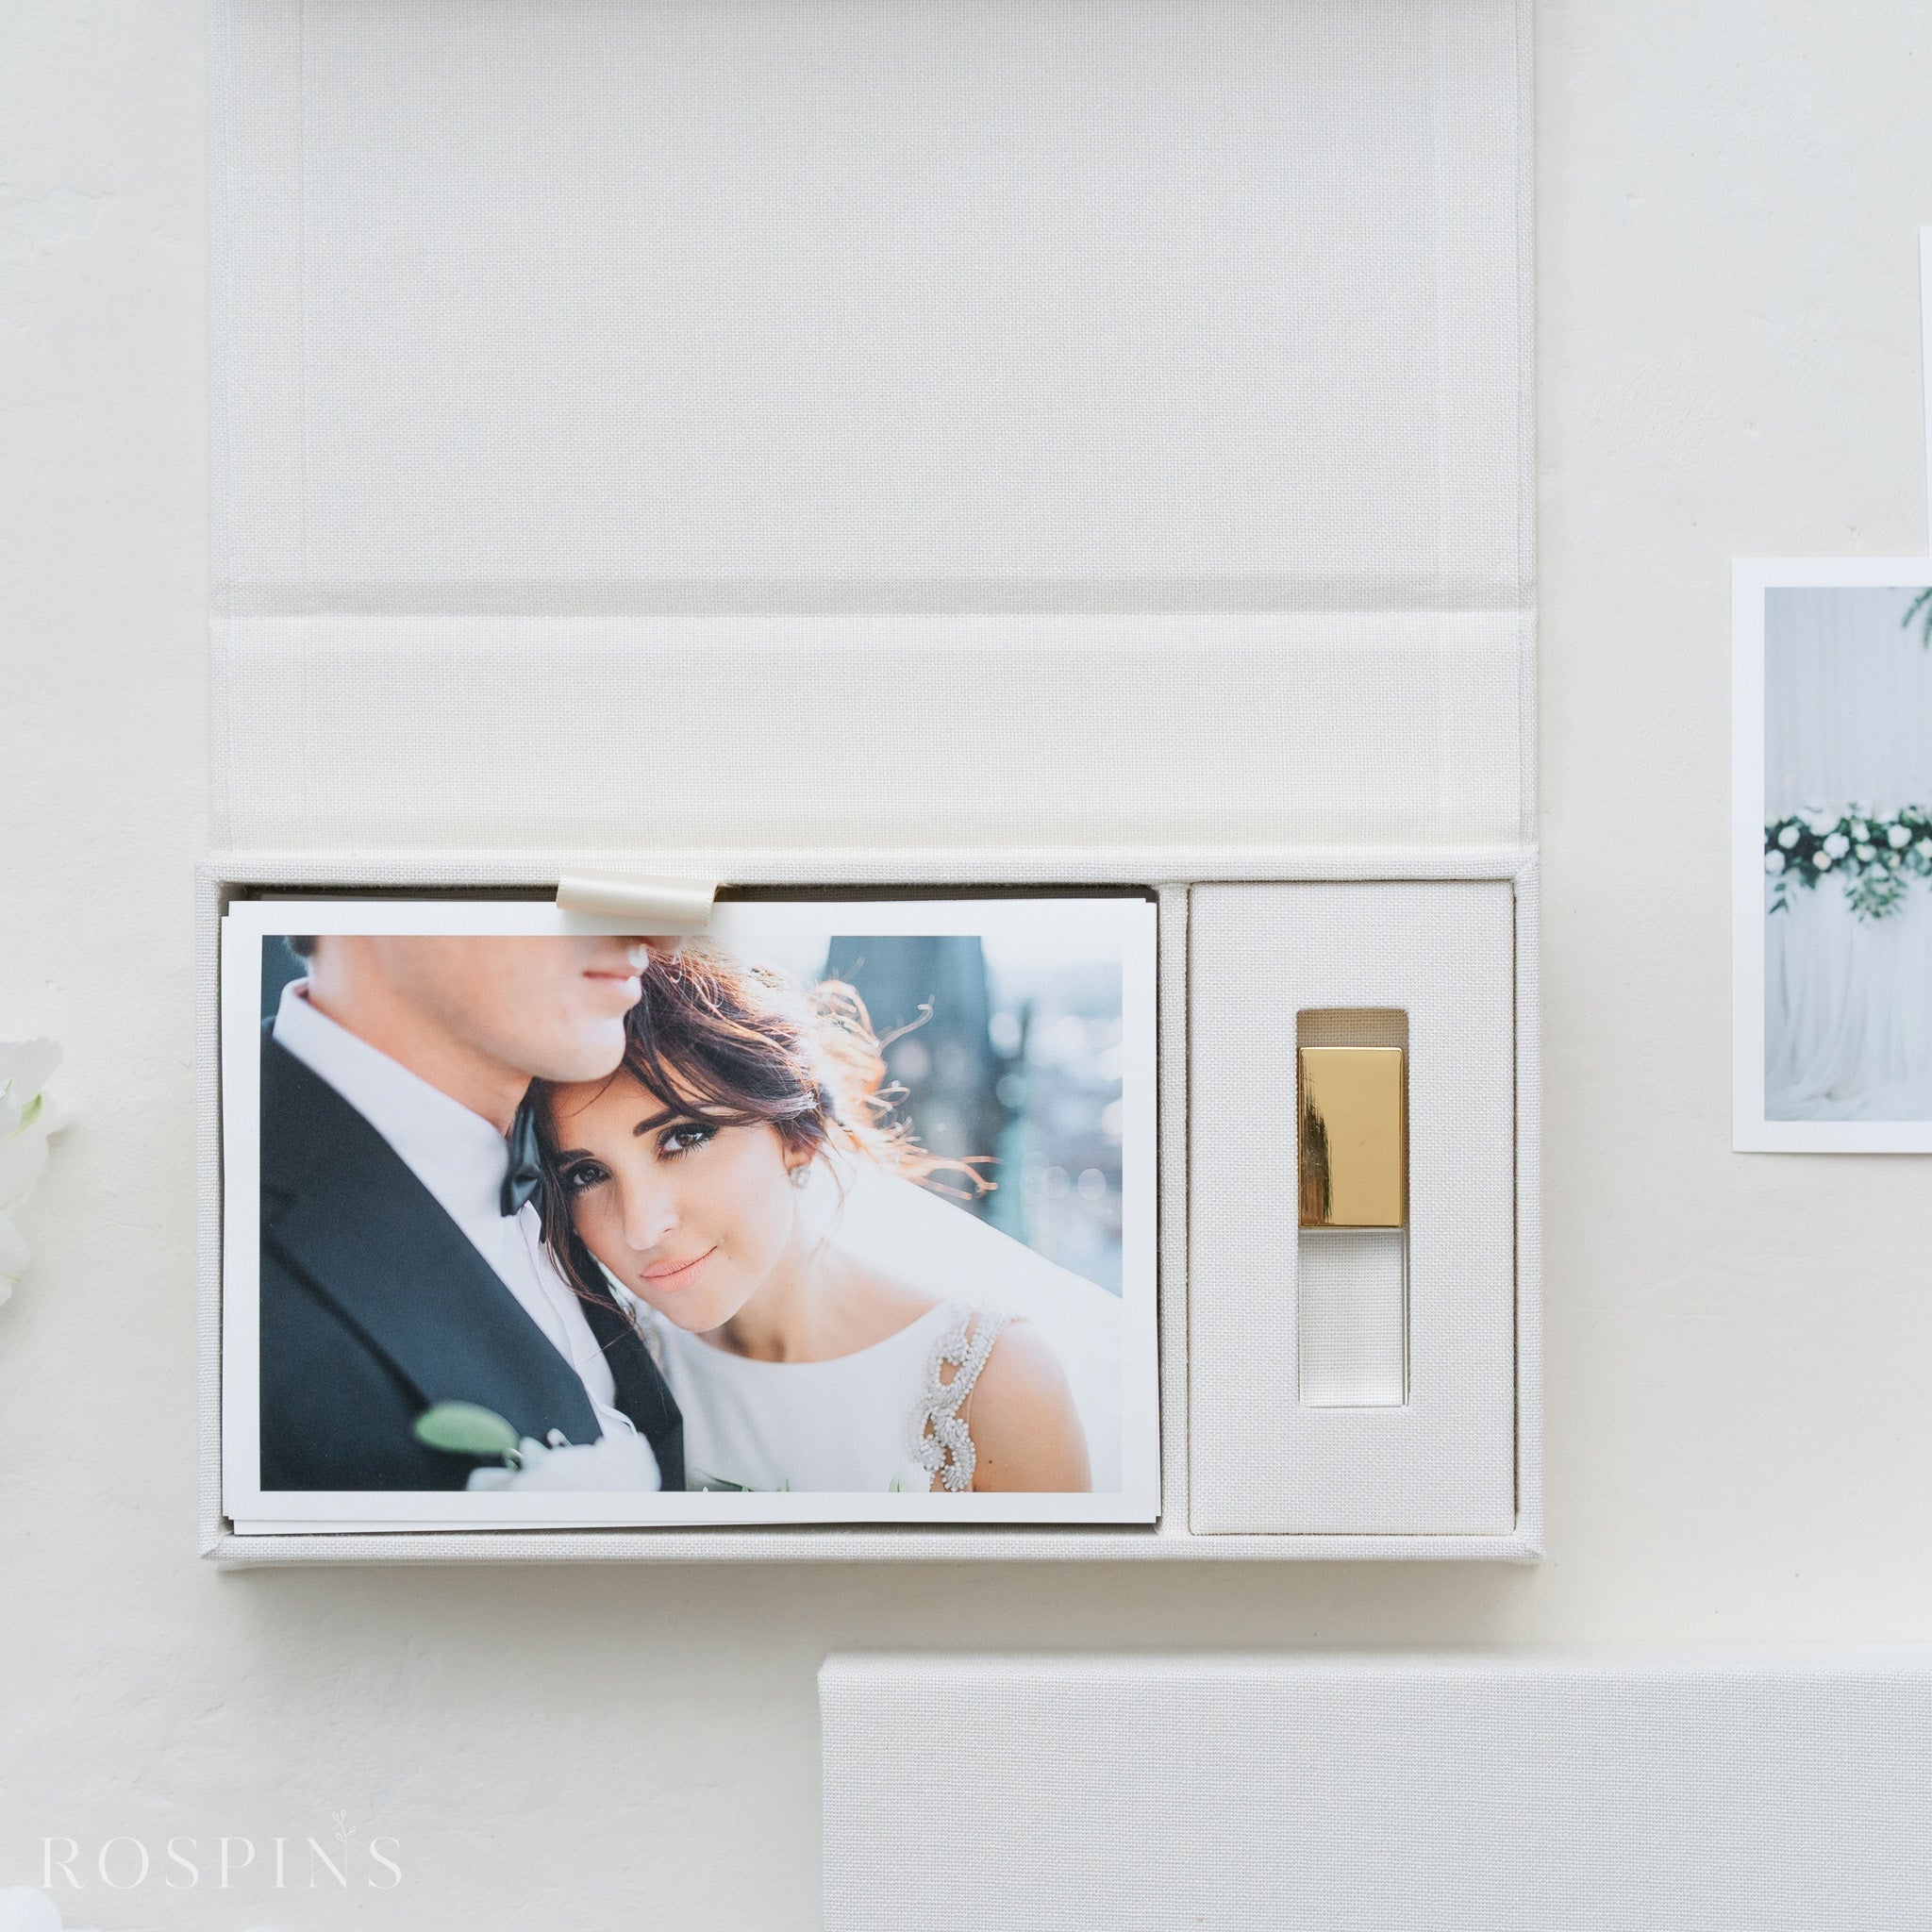 Linen Photo & USB Box - Creamy White